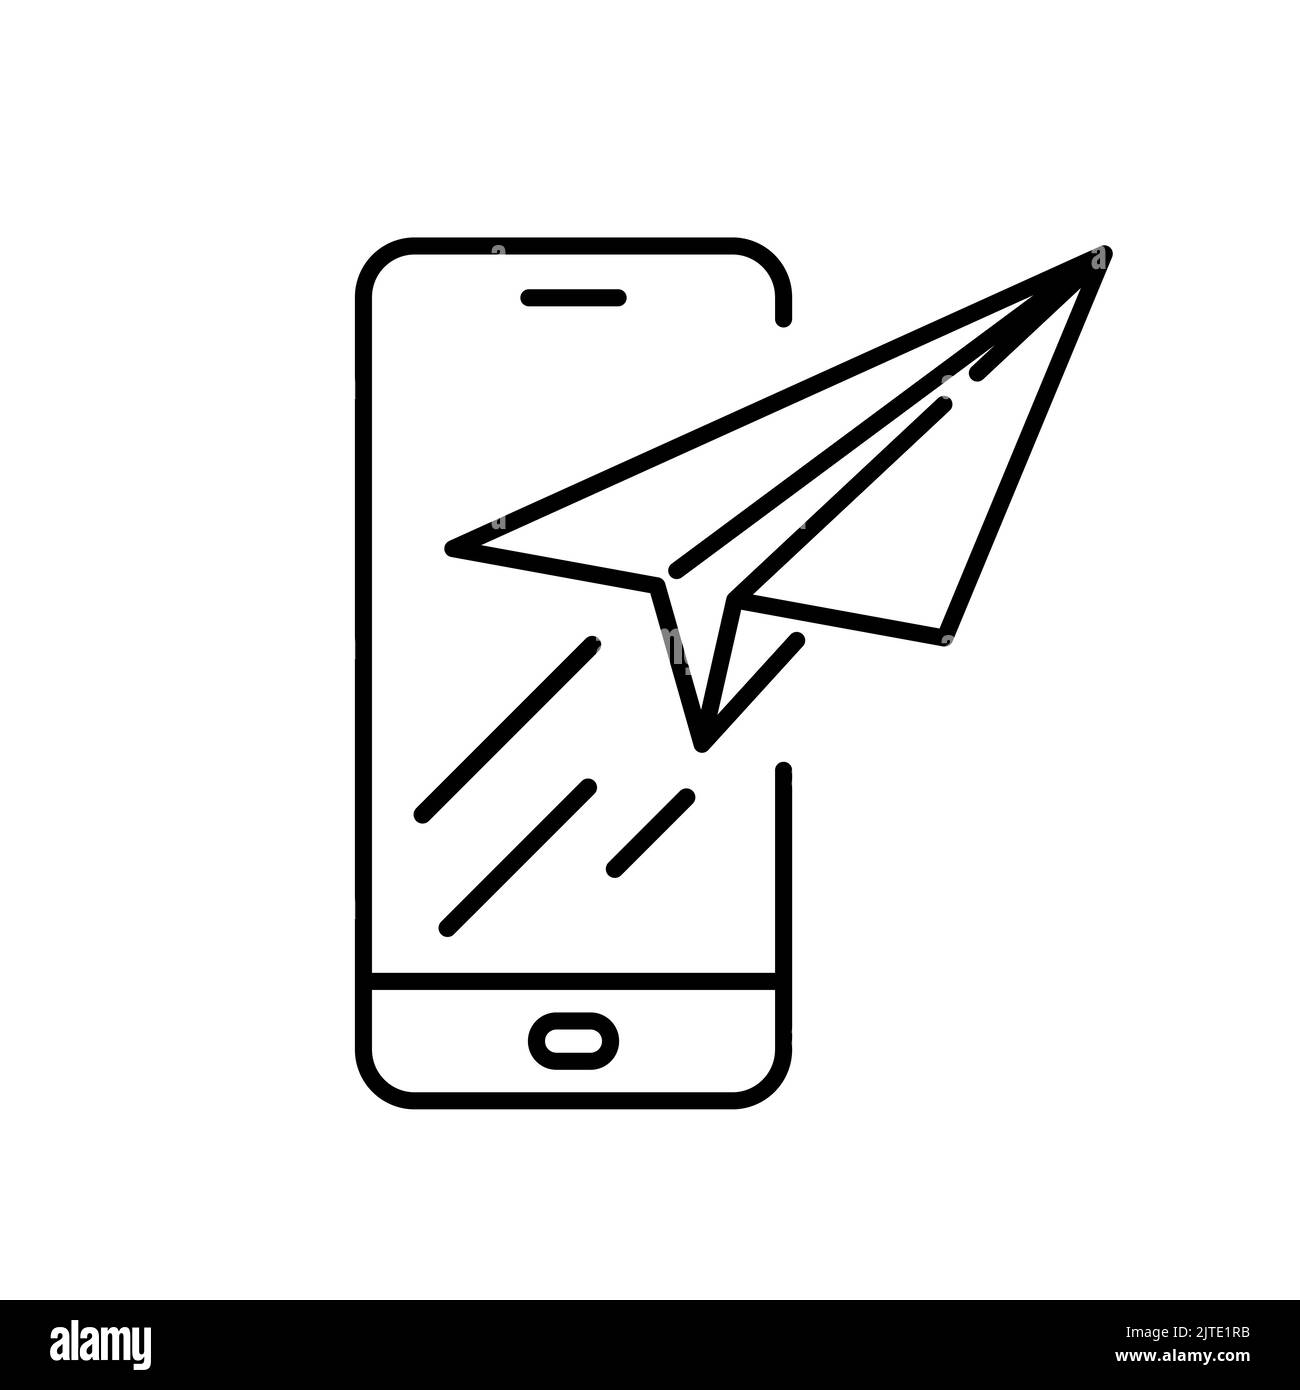 Paper plane with smartphone icon. Communication concept. Black conceptual icon. Vector illustration. Stock Vector